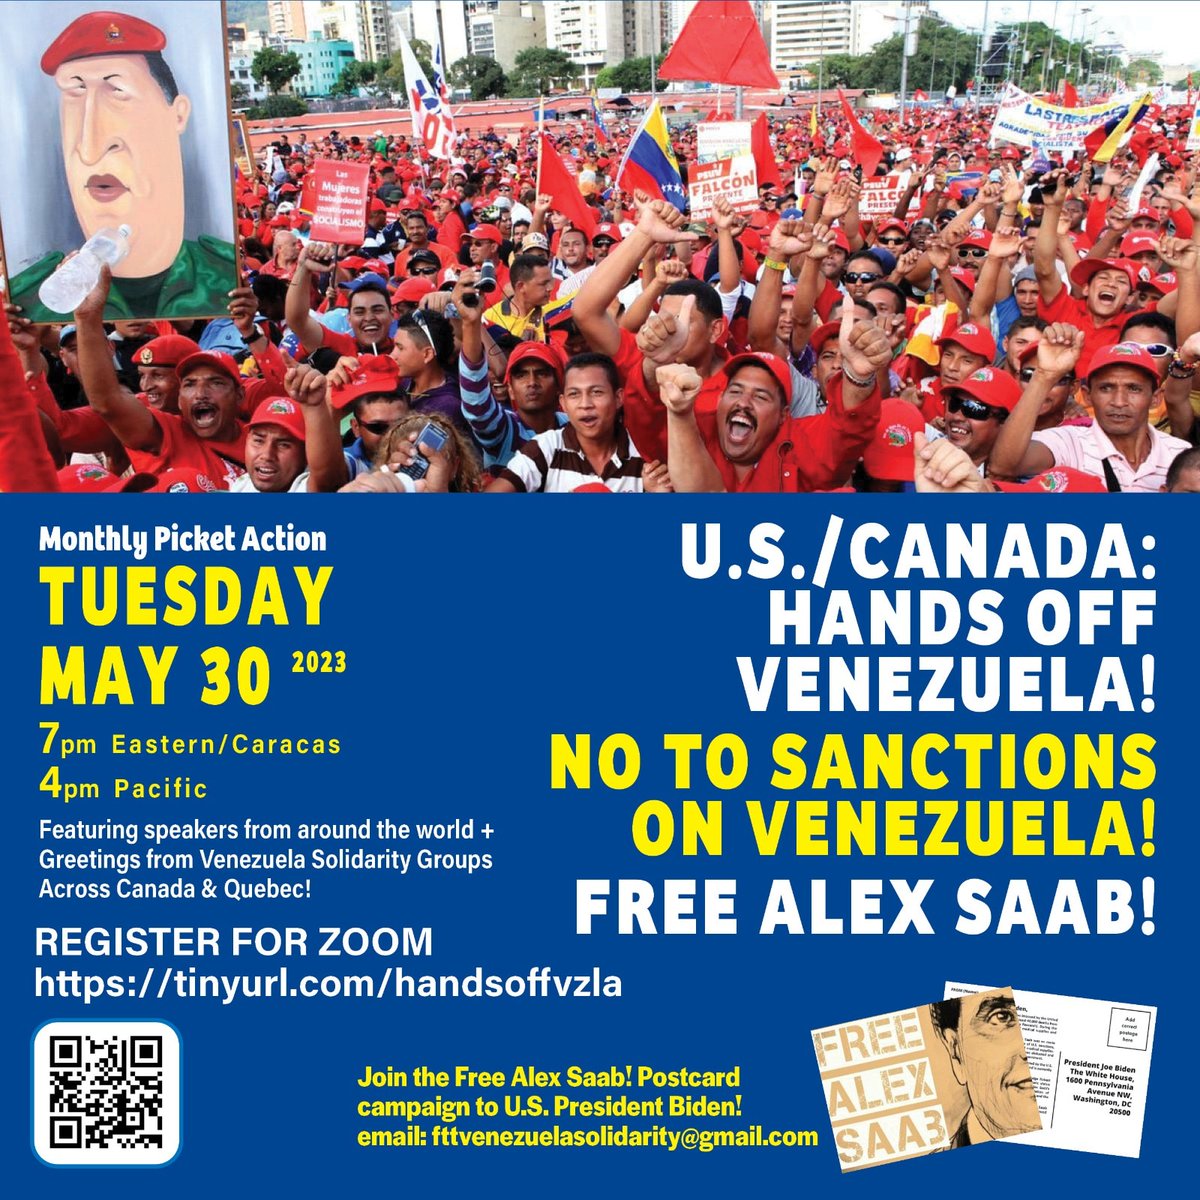 Tues. May 30 #HandsOffVenezuela #FreeAlexSaab online picket action! Feat. @camilapress of @KawsachunNews, Milanyela Fermin & Wilmer Armando Depablos of @FreeAlexSaabOrg, @salakokayode7 from Nigeria + more!
Register: tinyurl.com/handsoffvzla #vanpoli #cdnpoli #Venezuela